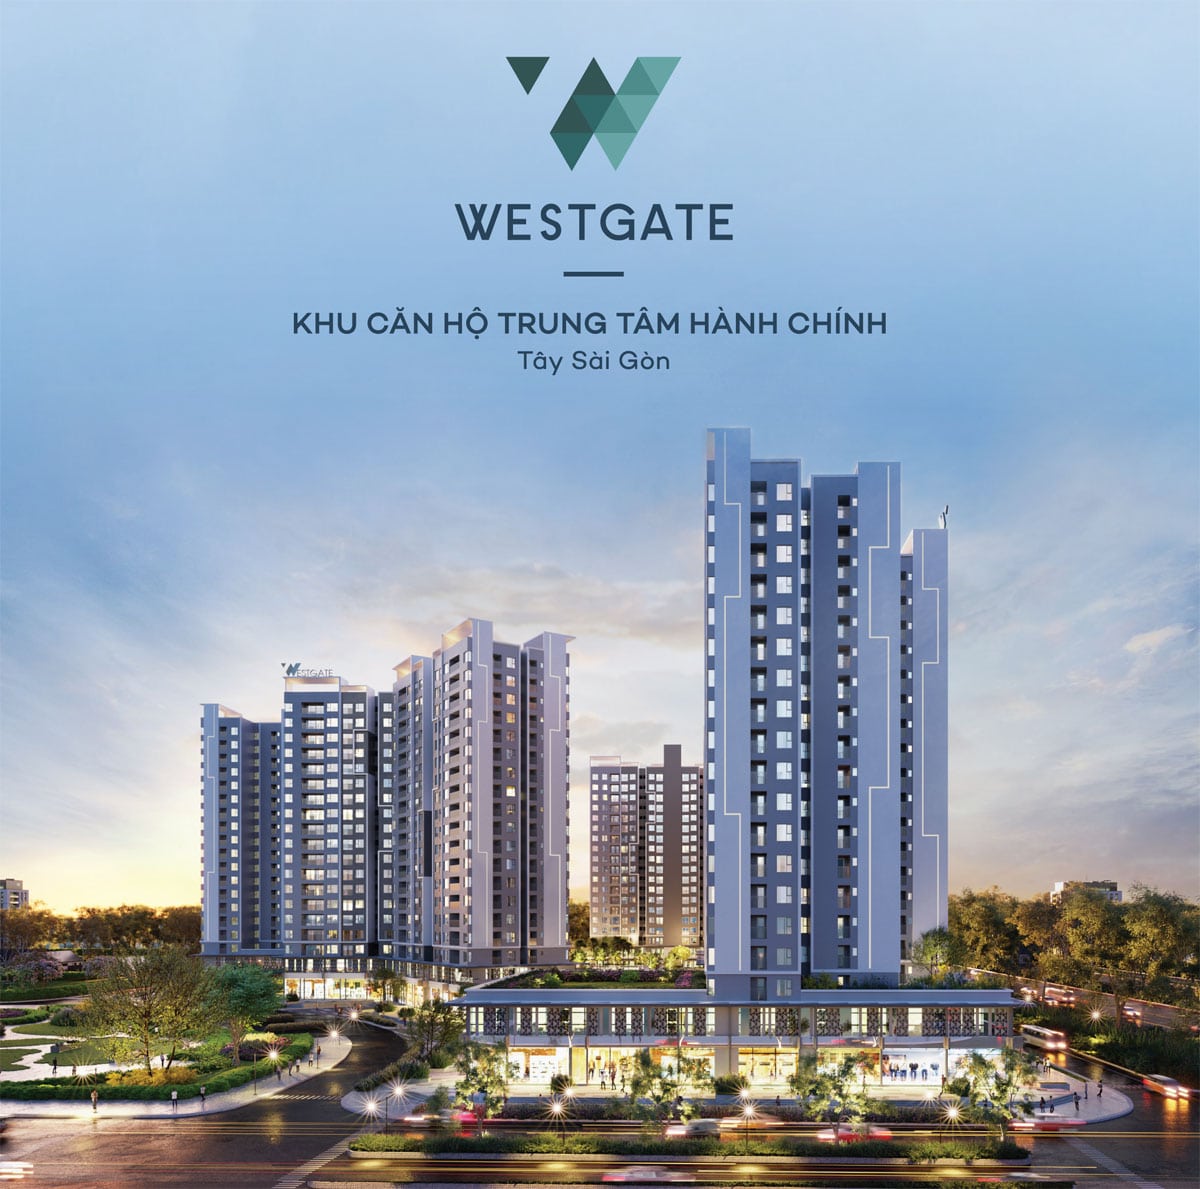 westgate - West Gate Bình Chánh